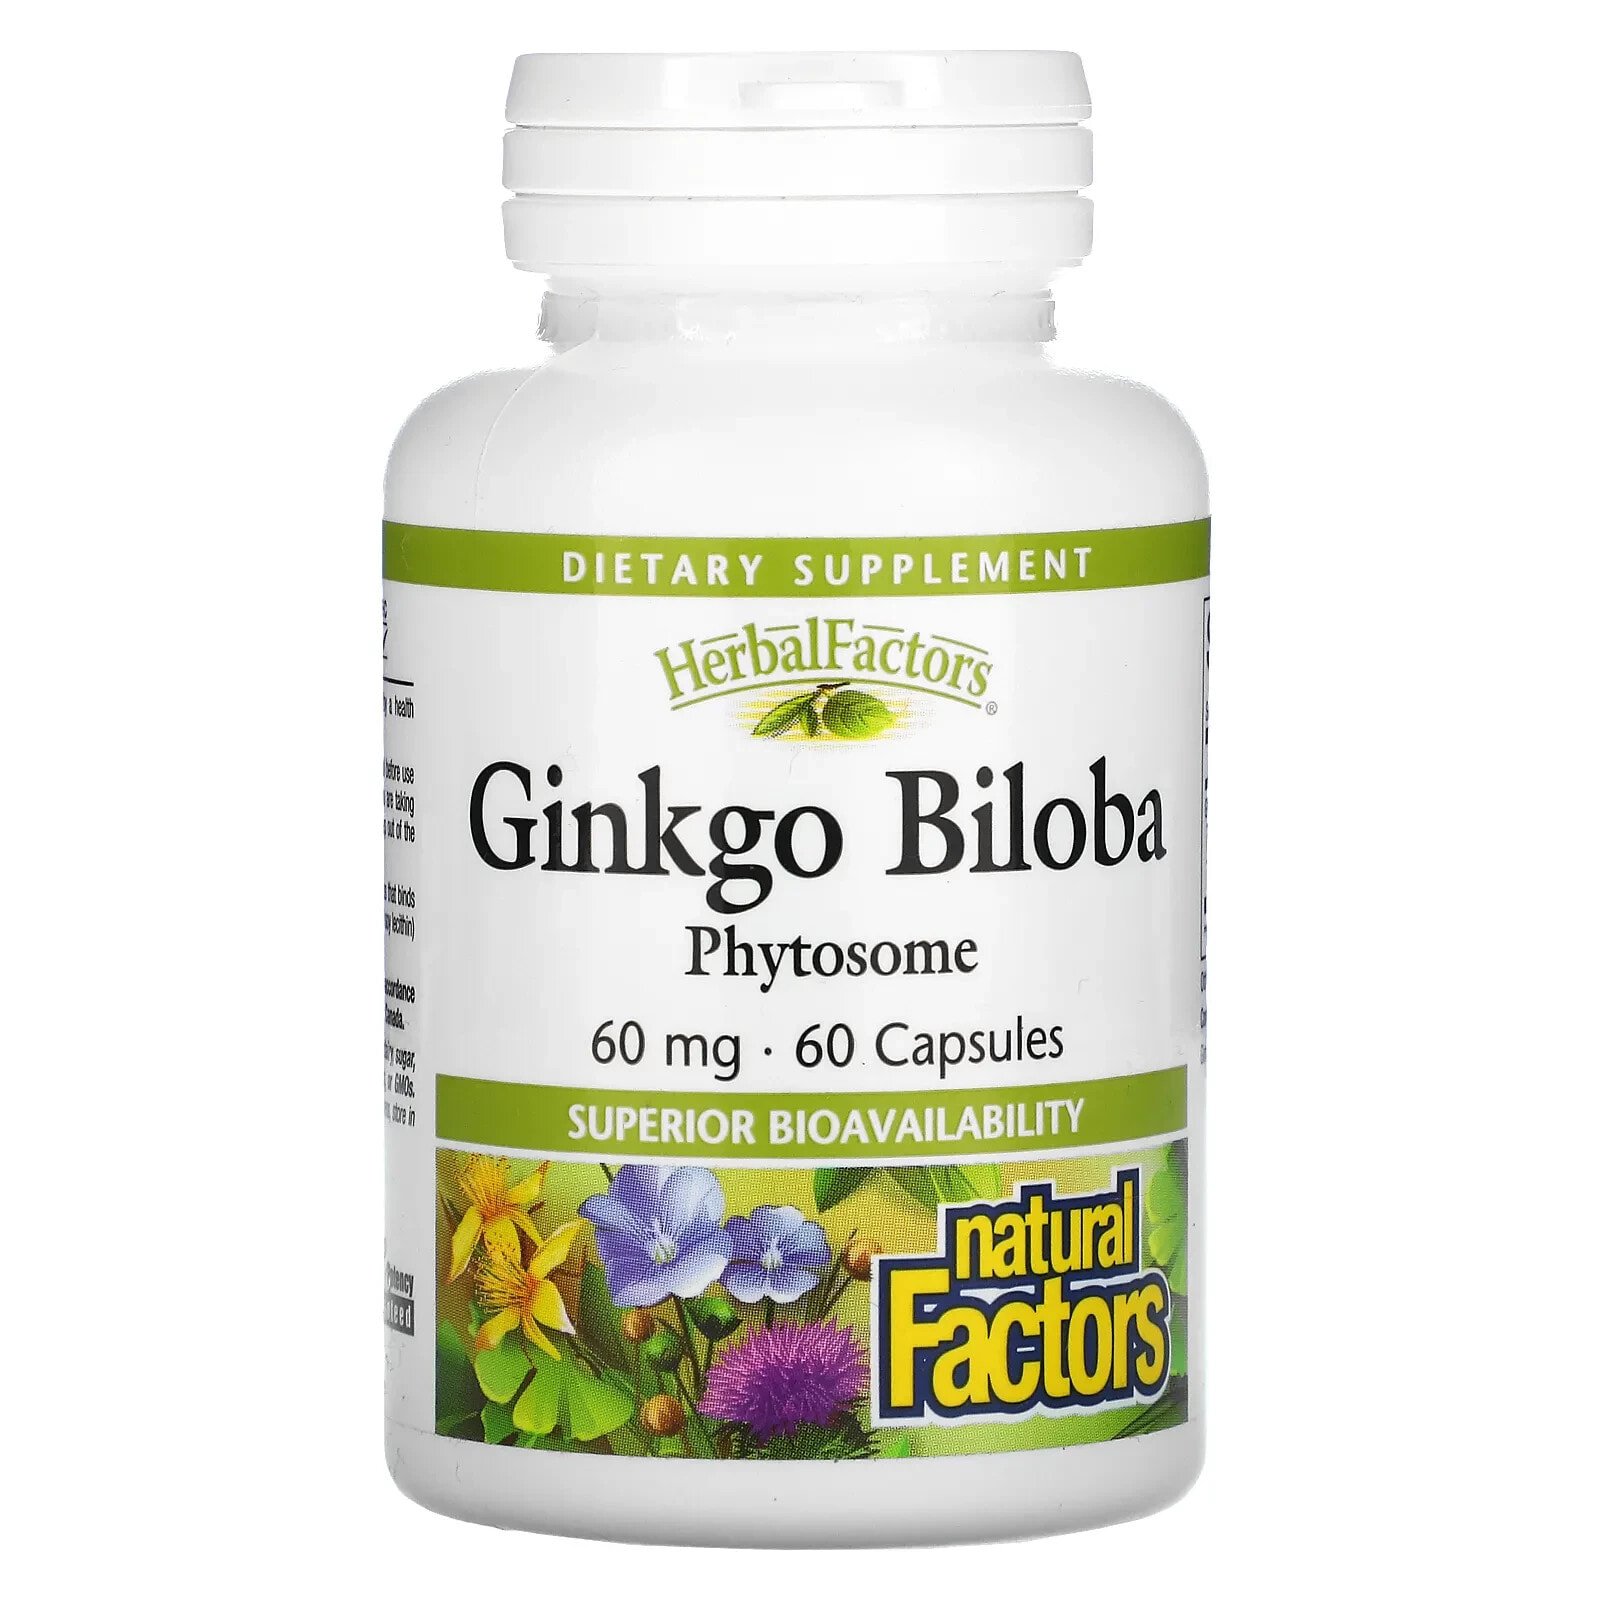 Ginkgo Biloba, Phytosome, 60 mg, 60 Capsules